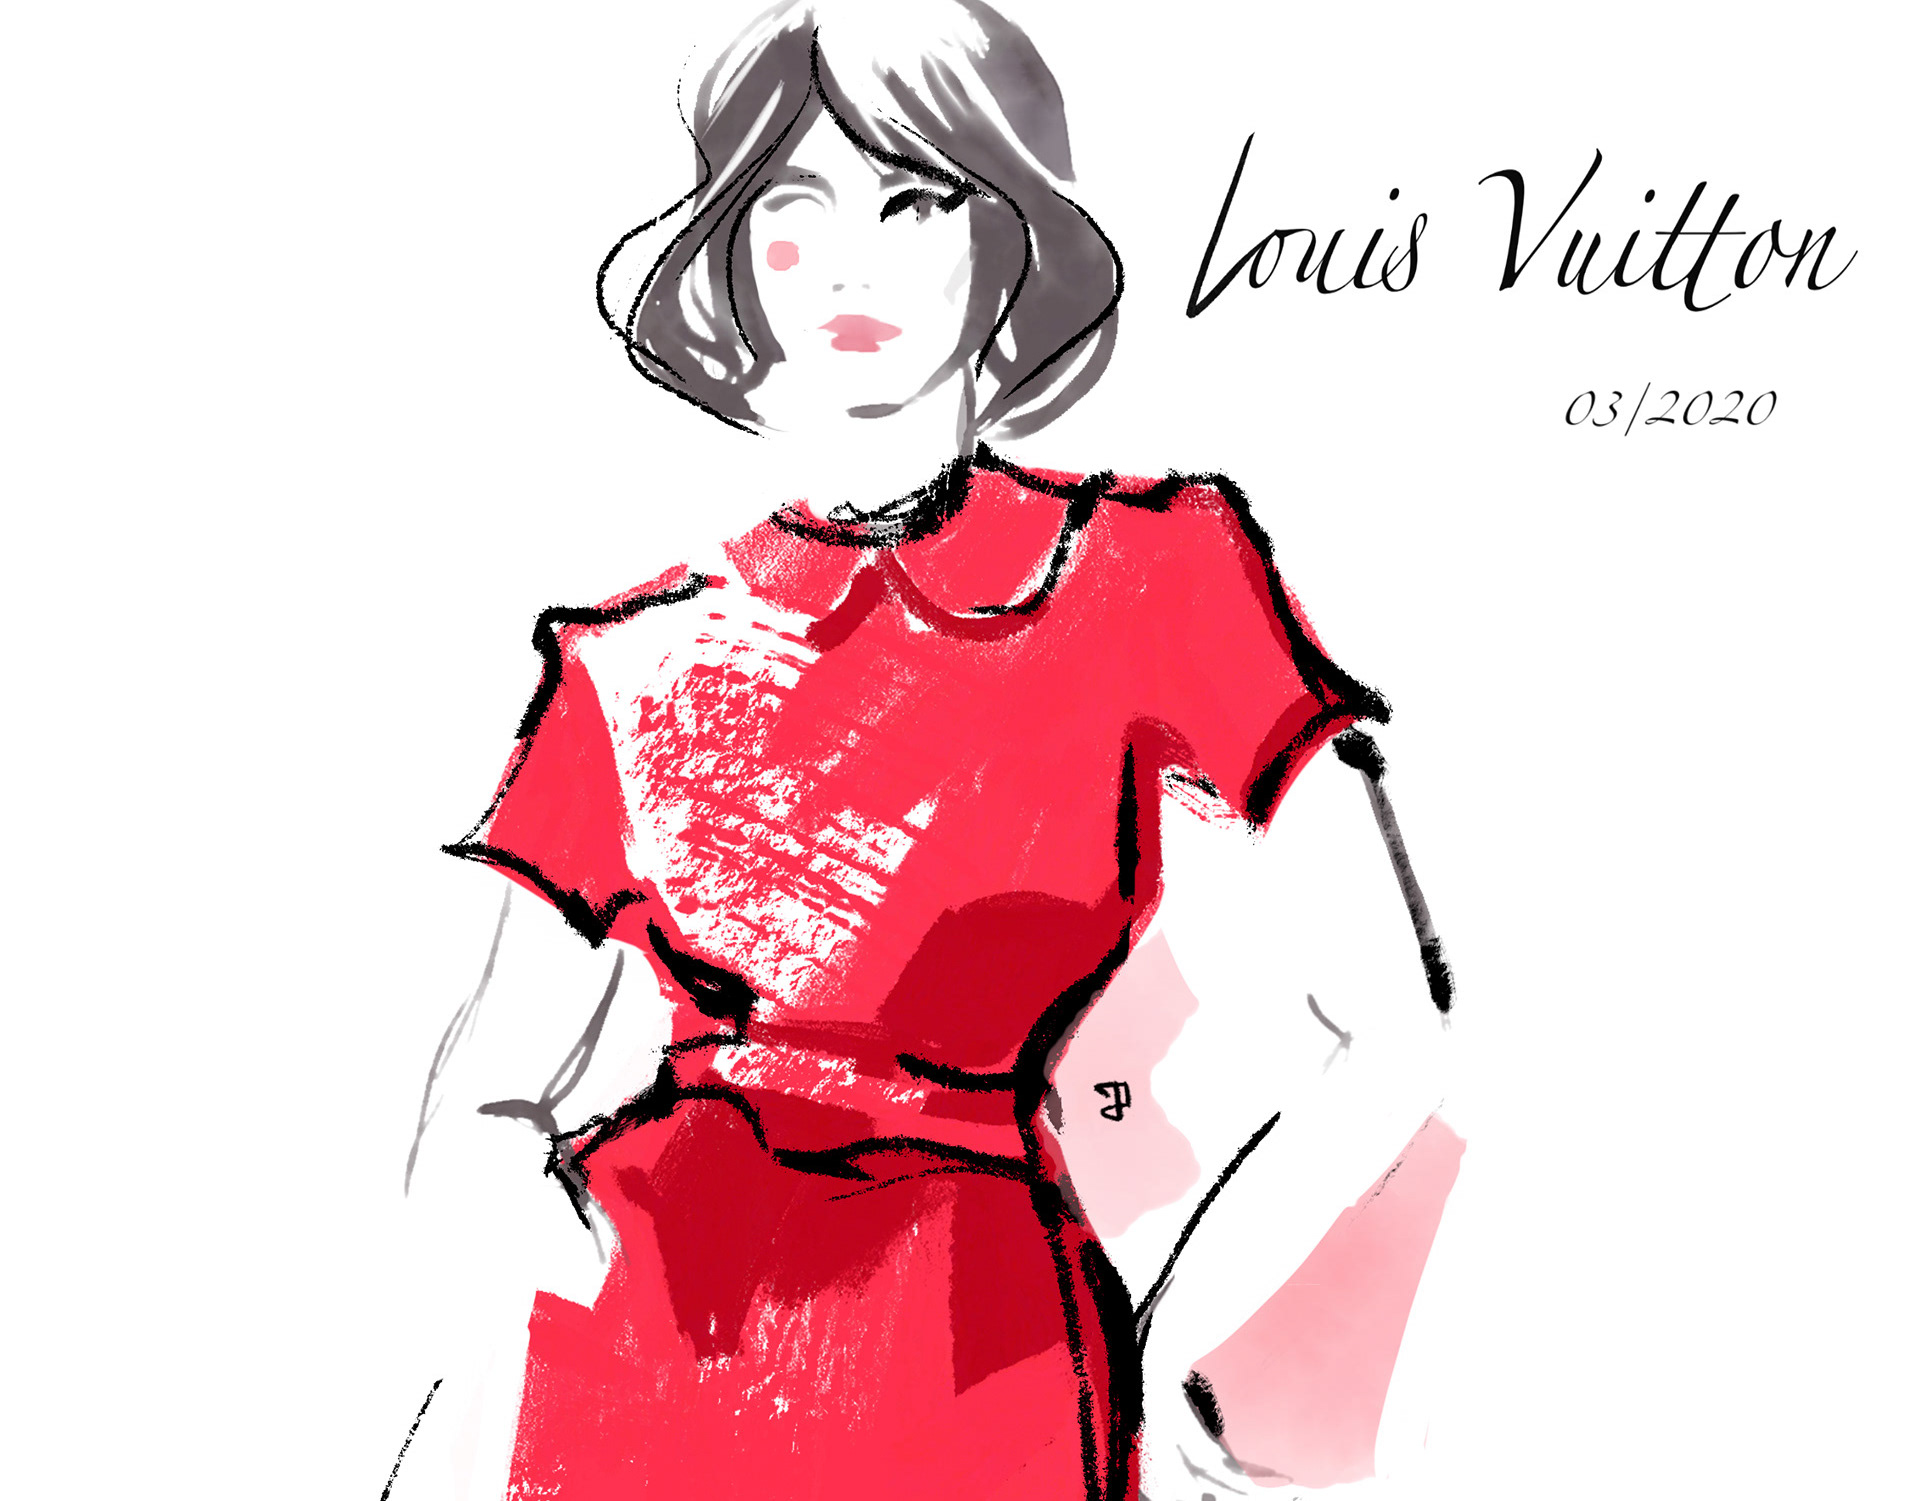 Evgeniya Hitz - Louis Vuitton